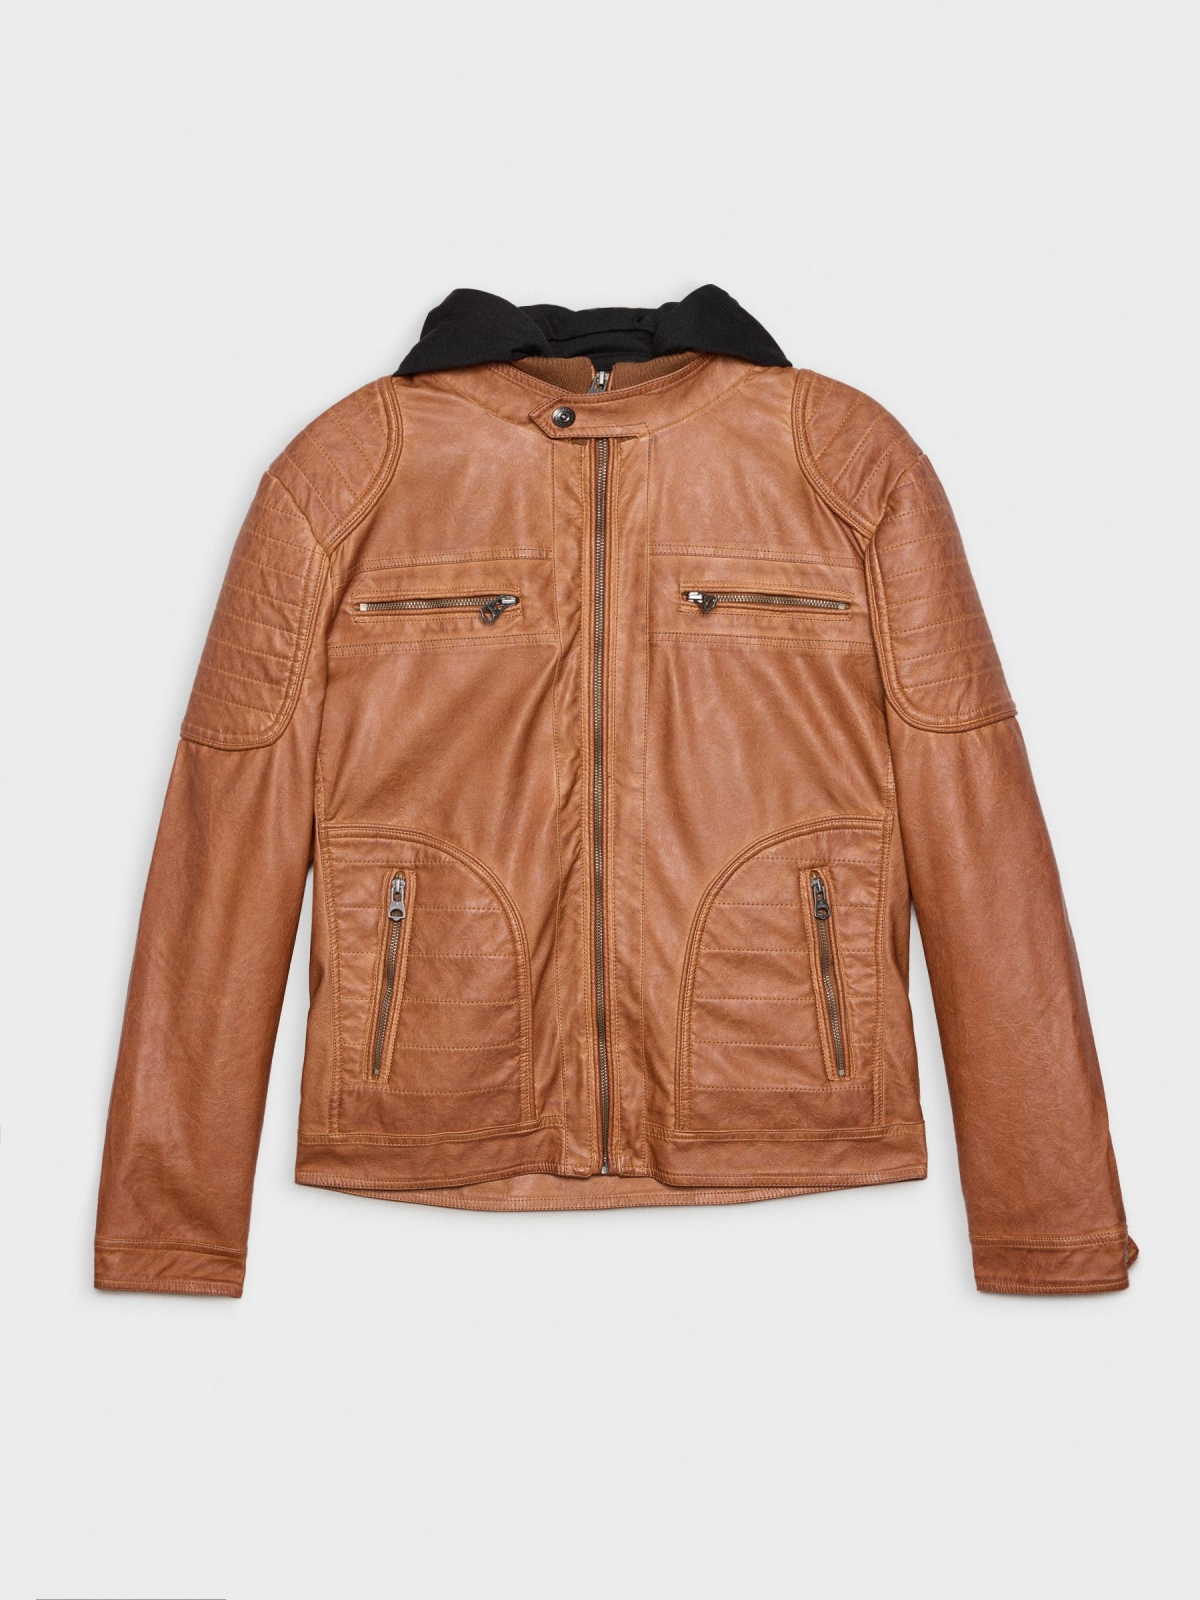  Brown leather effect jacket beige